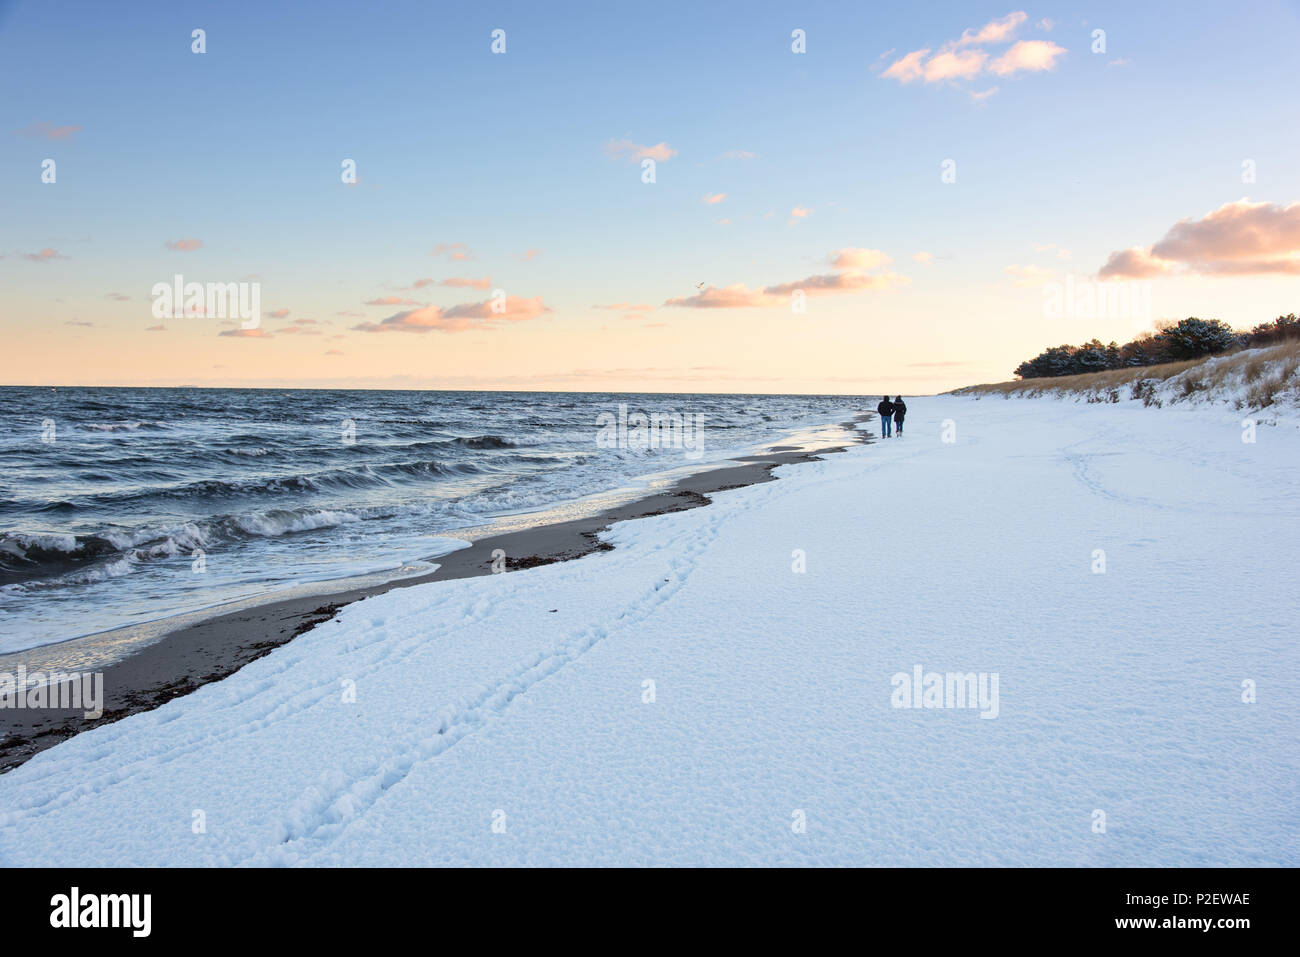 Le lever du soleil, Plage, Neige, hiver, balade, mer Baltique, Darss, Zingst, Allemagne Banque D'Images